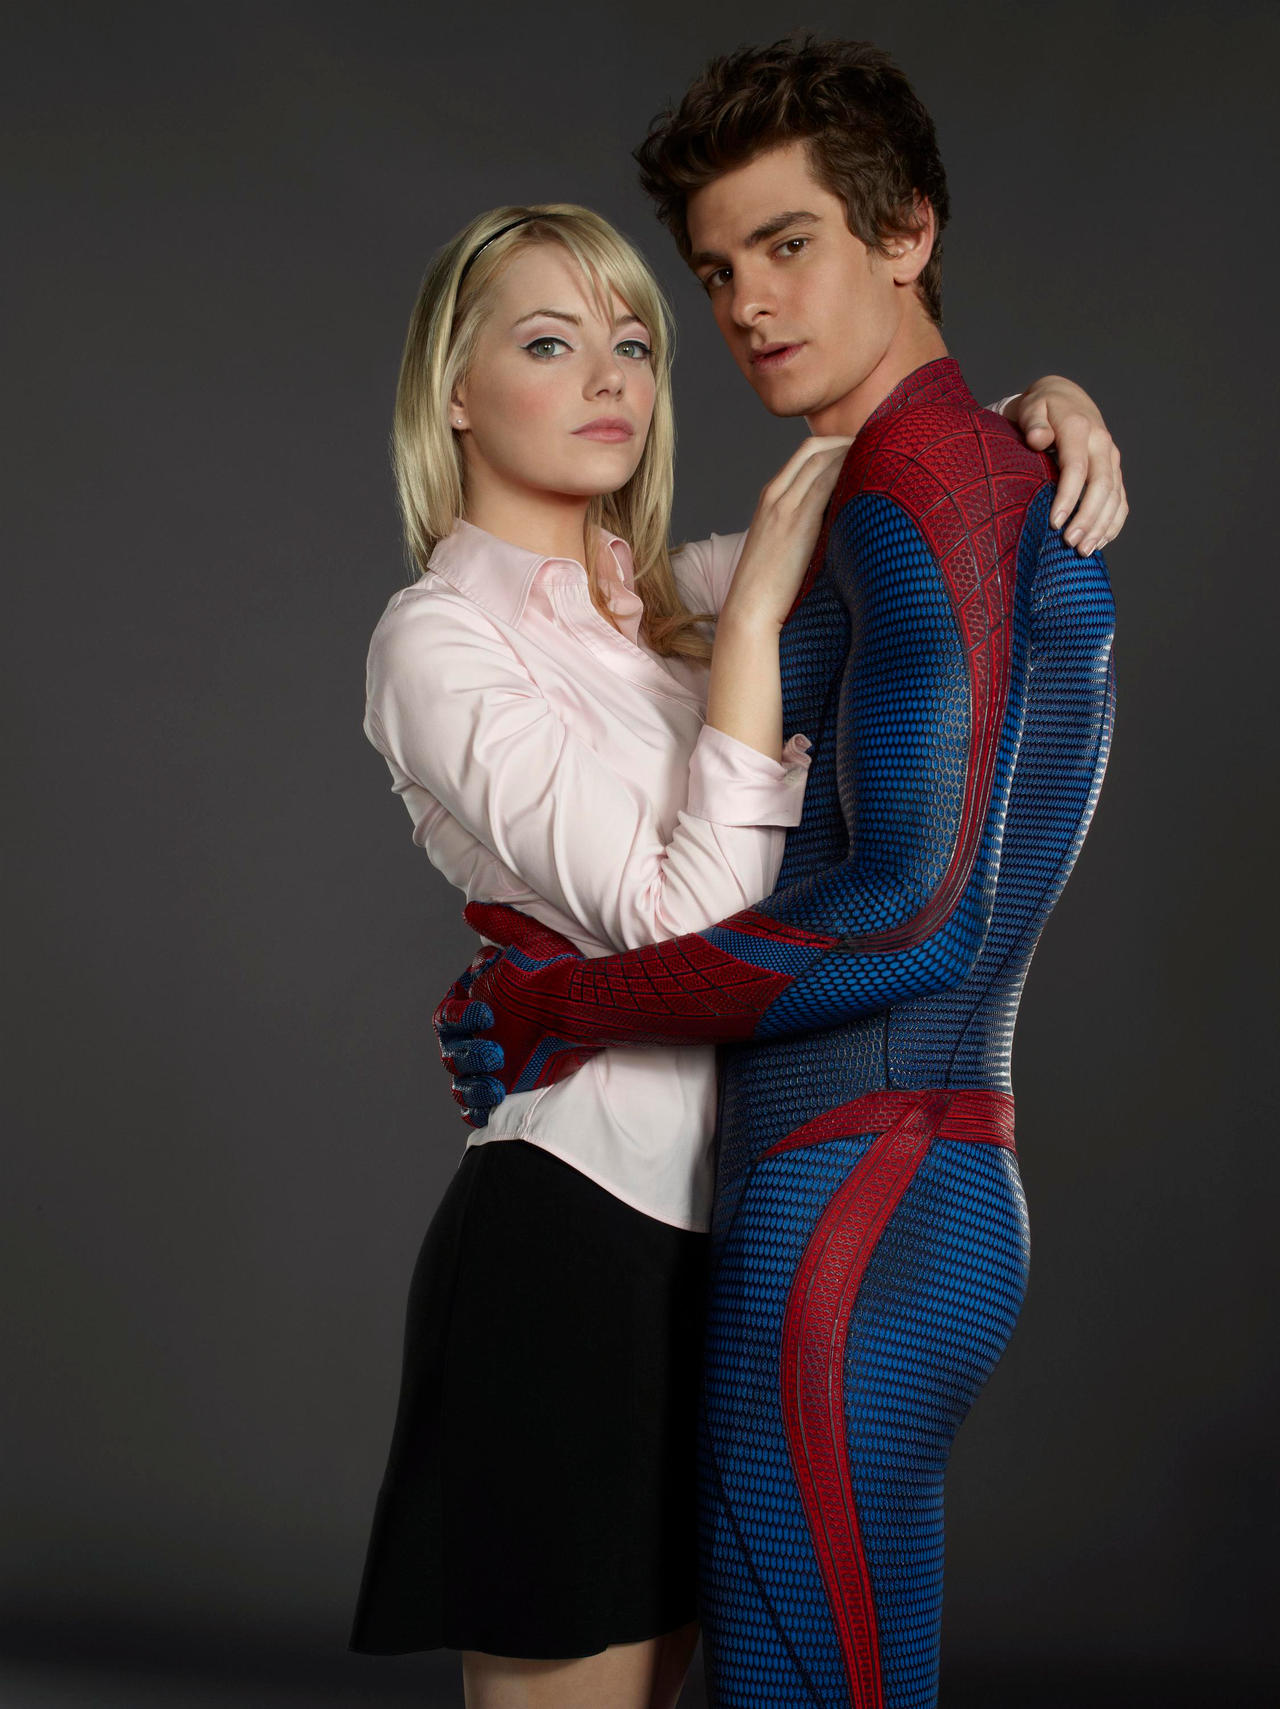 Amazing Spider-man Cast 05 by DCMediaBadGirls on DeviantArt